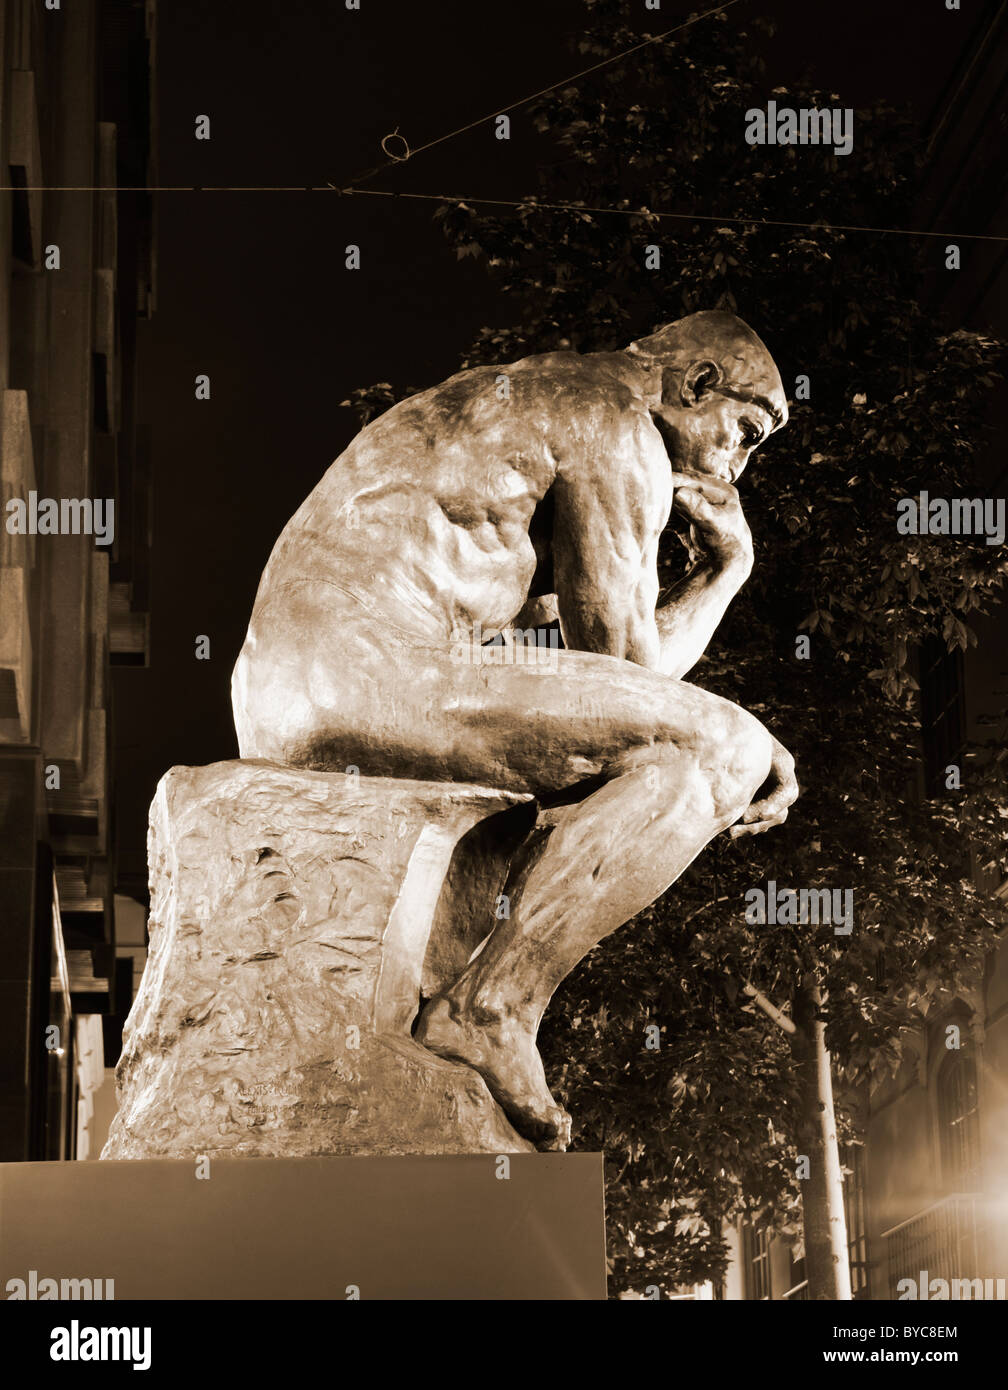 The Thinker. Original bronze sculpture by Auguste Rodin. Stock Photo